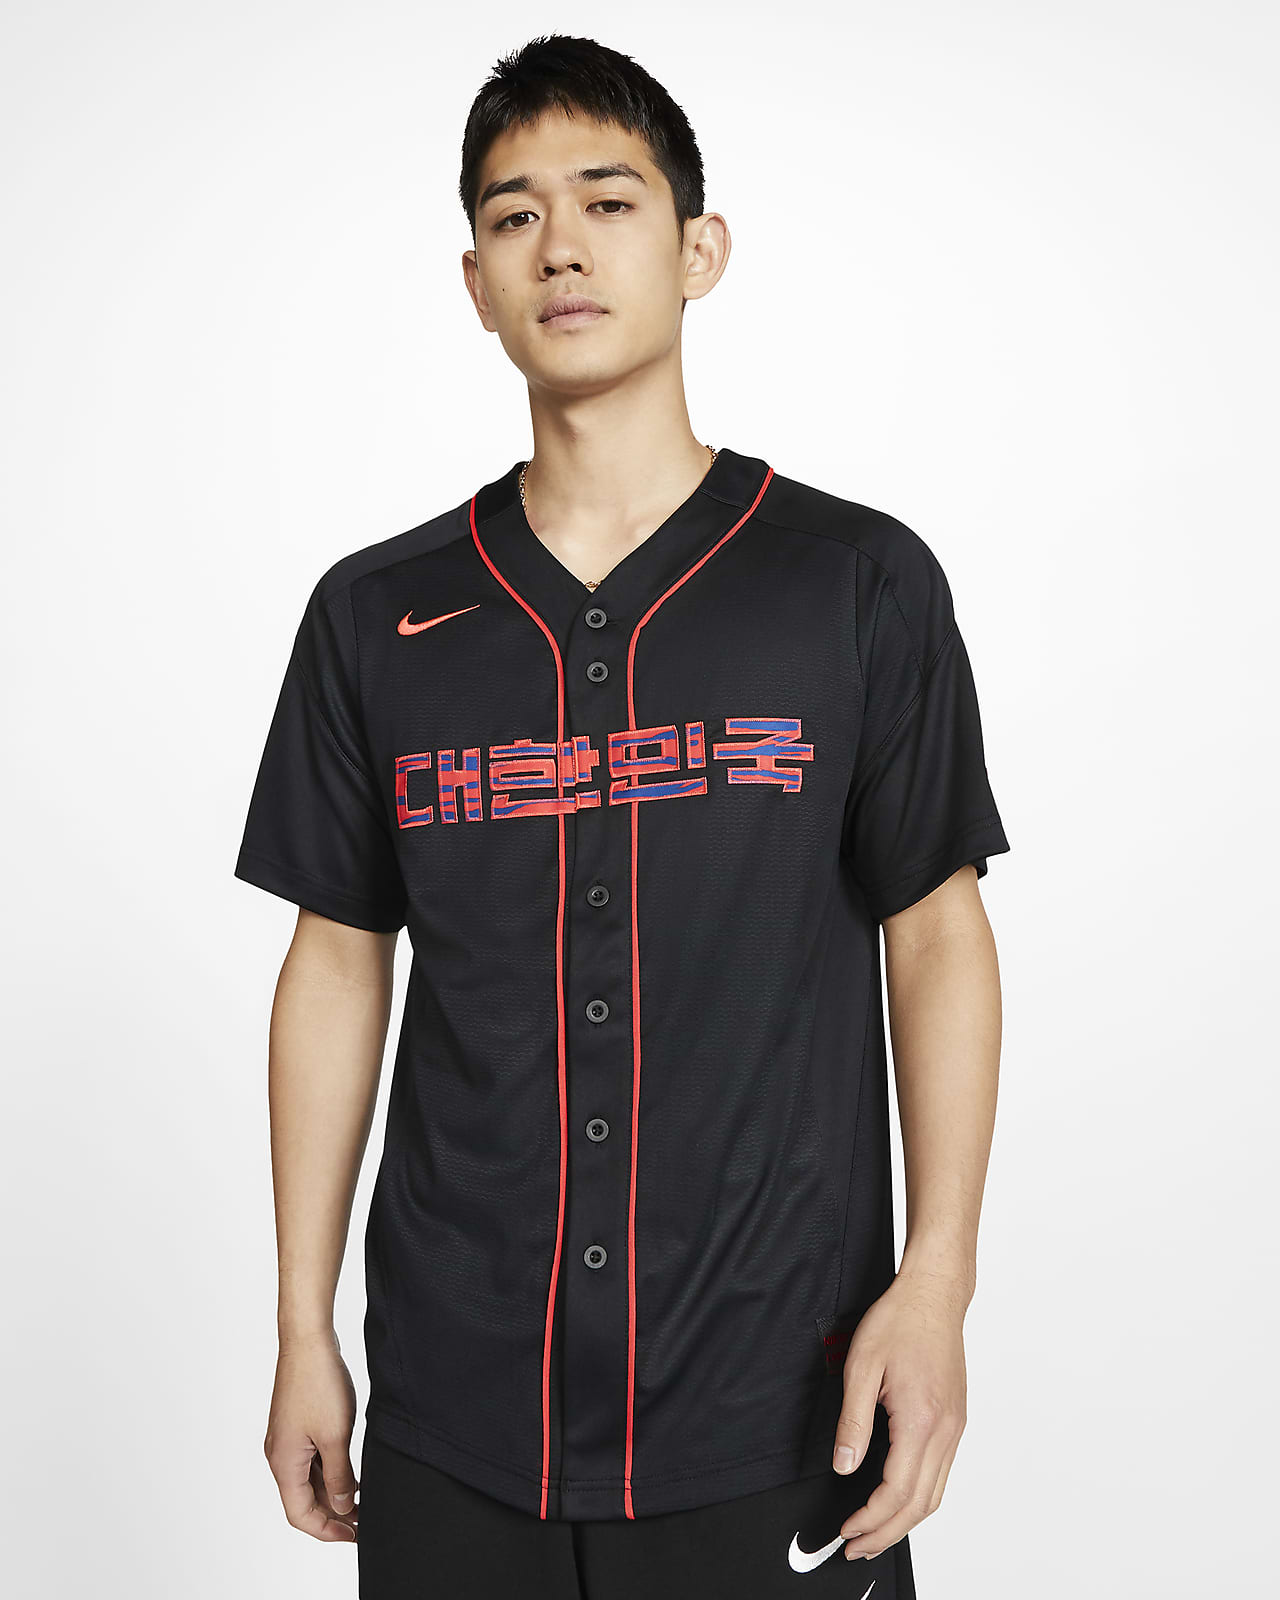 Korea Men's Baseball Jersey. Nike.com